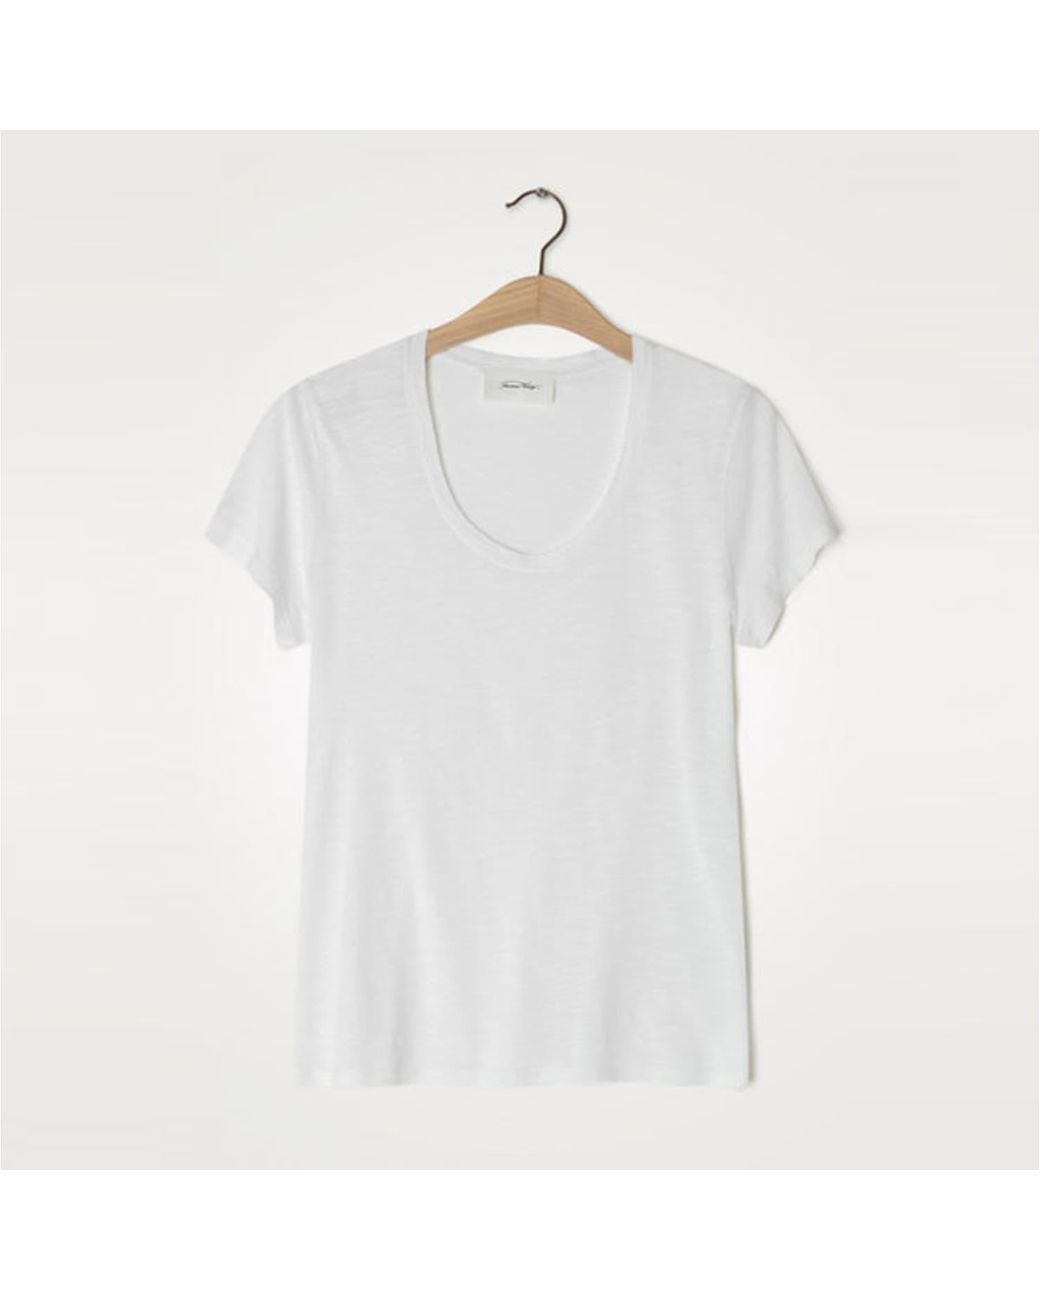 American Vintage Cotton Jacksonville Blanc White T-shirt | Lyst